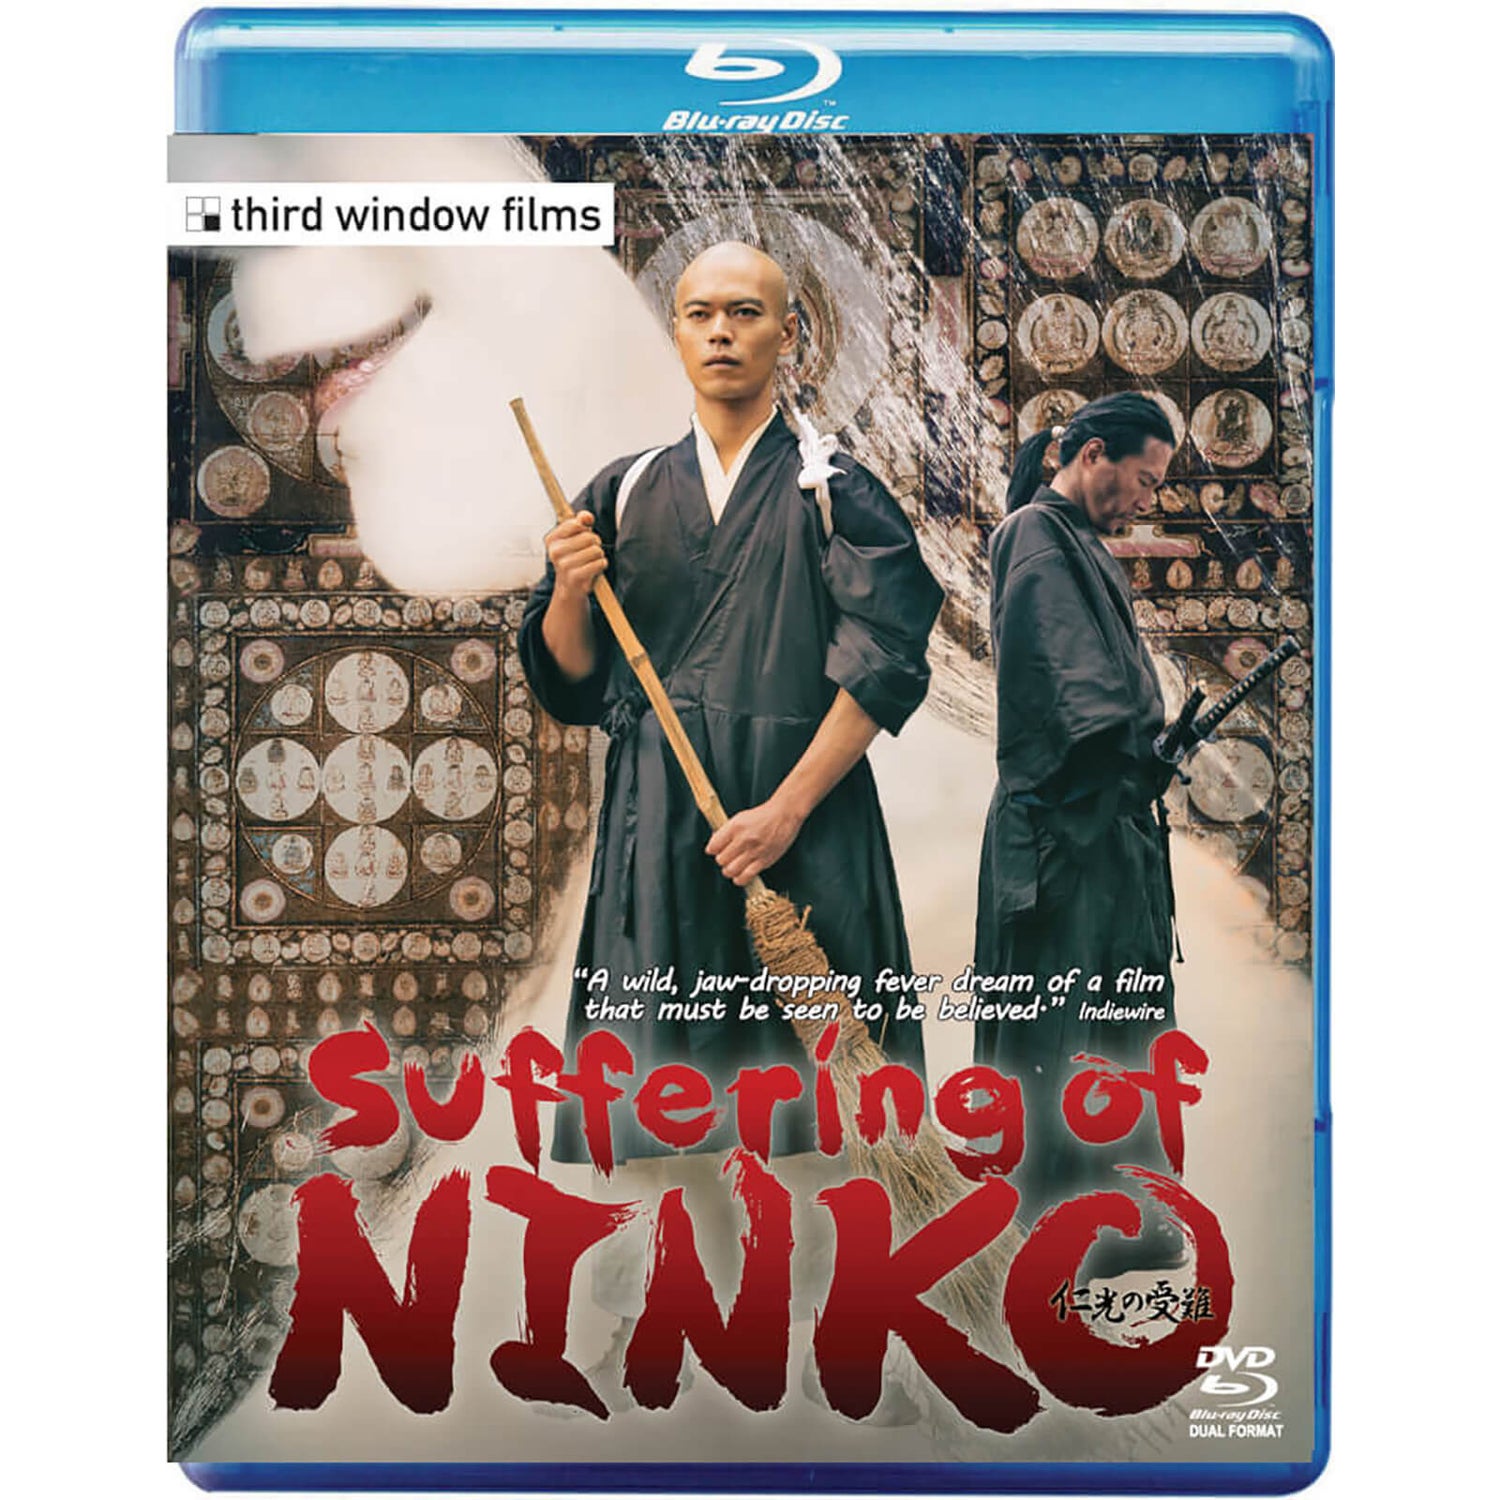 Suffering Of Ninko Blu-ray